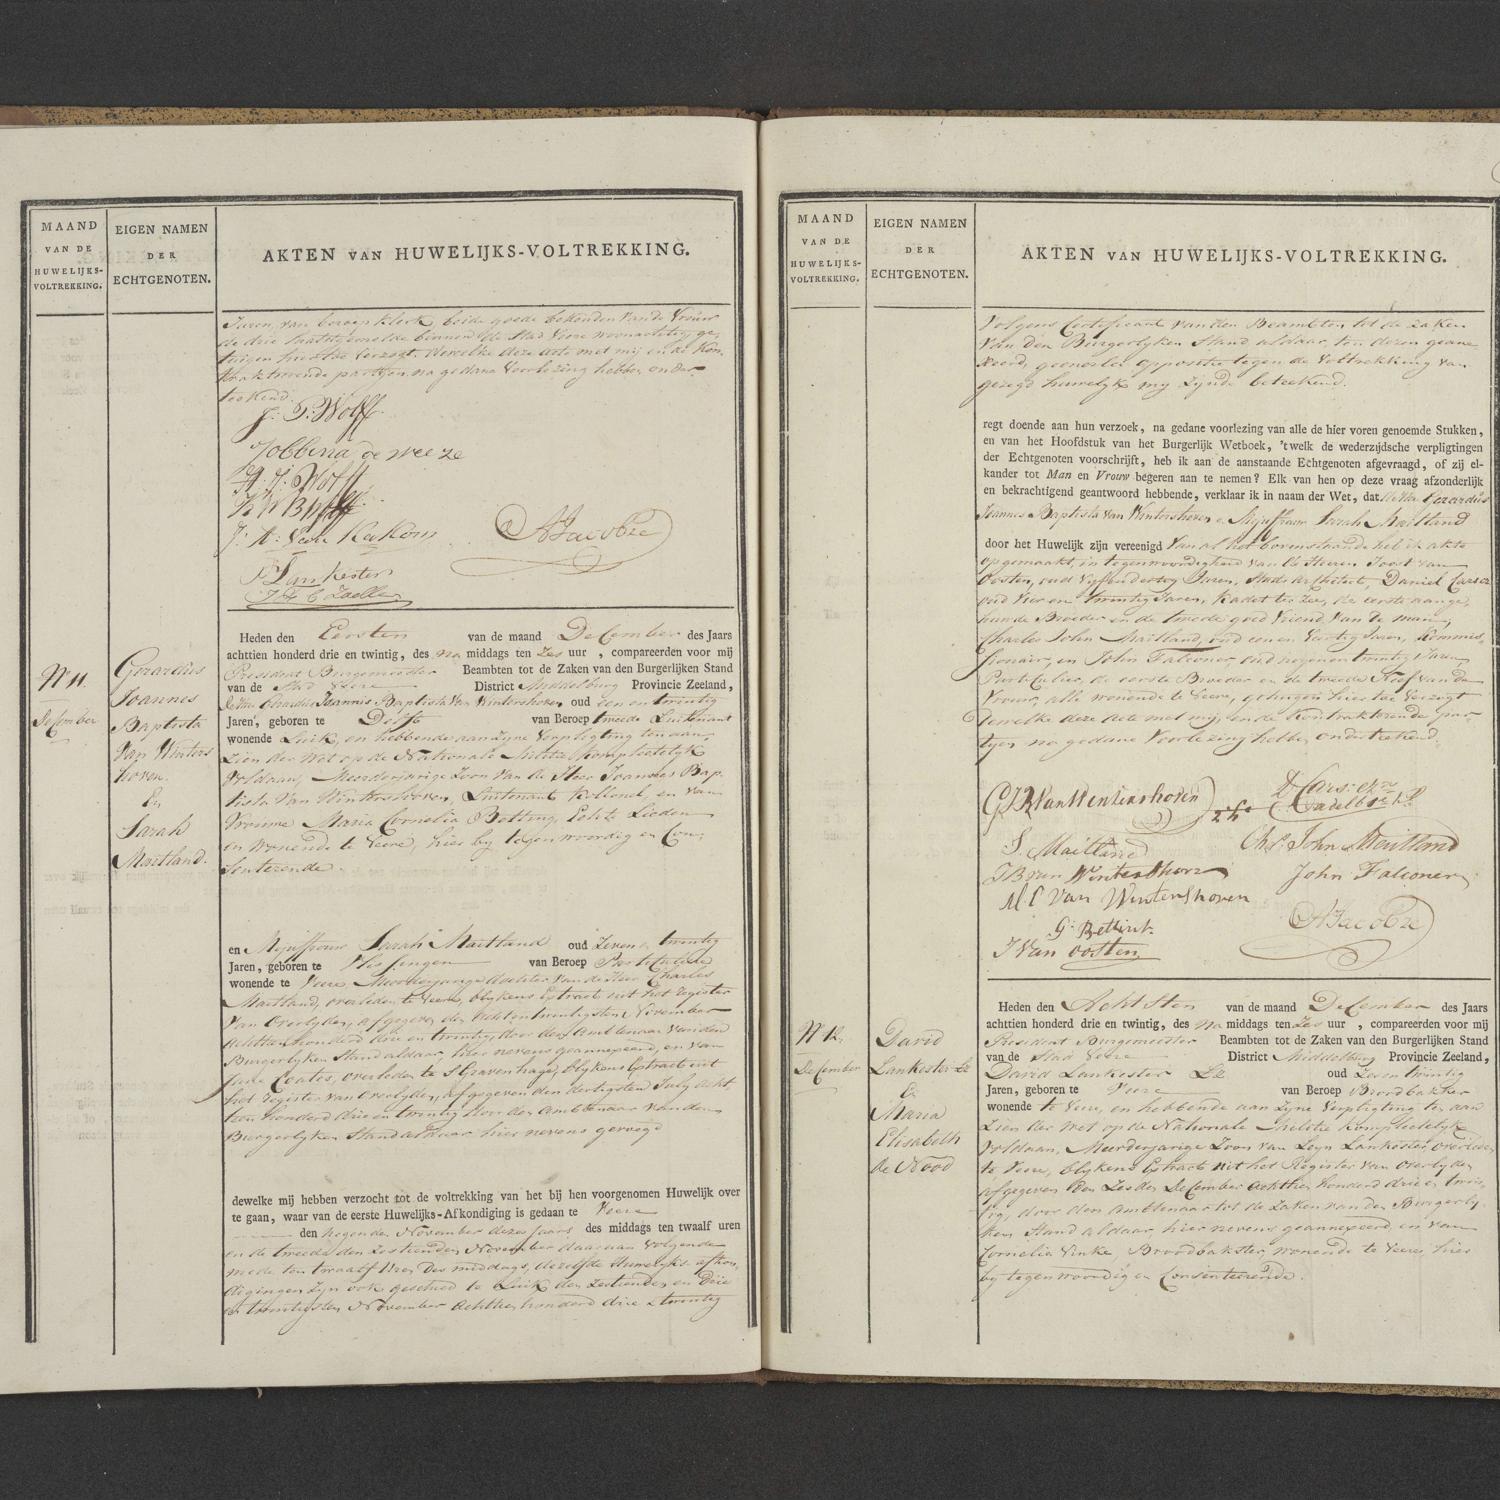 Civil registry of marriages, Veere, 1823, records 11-12